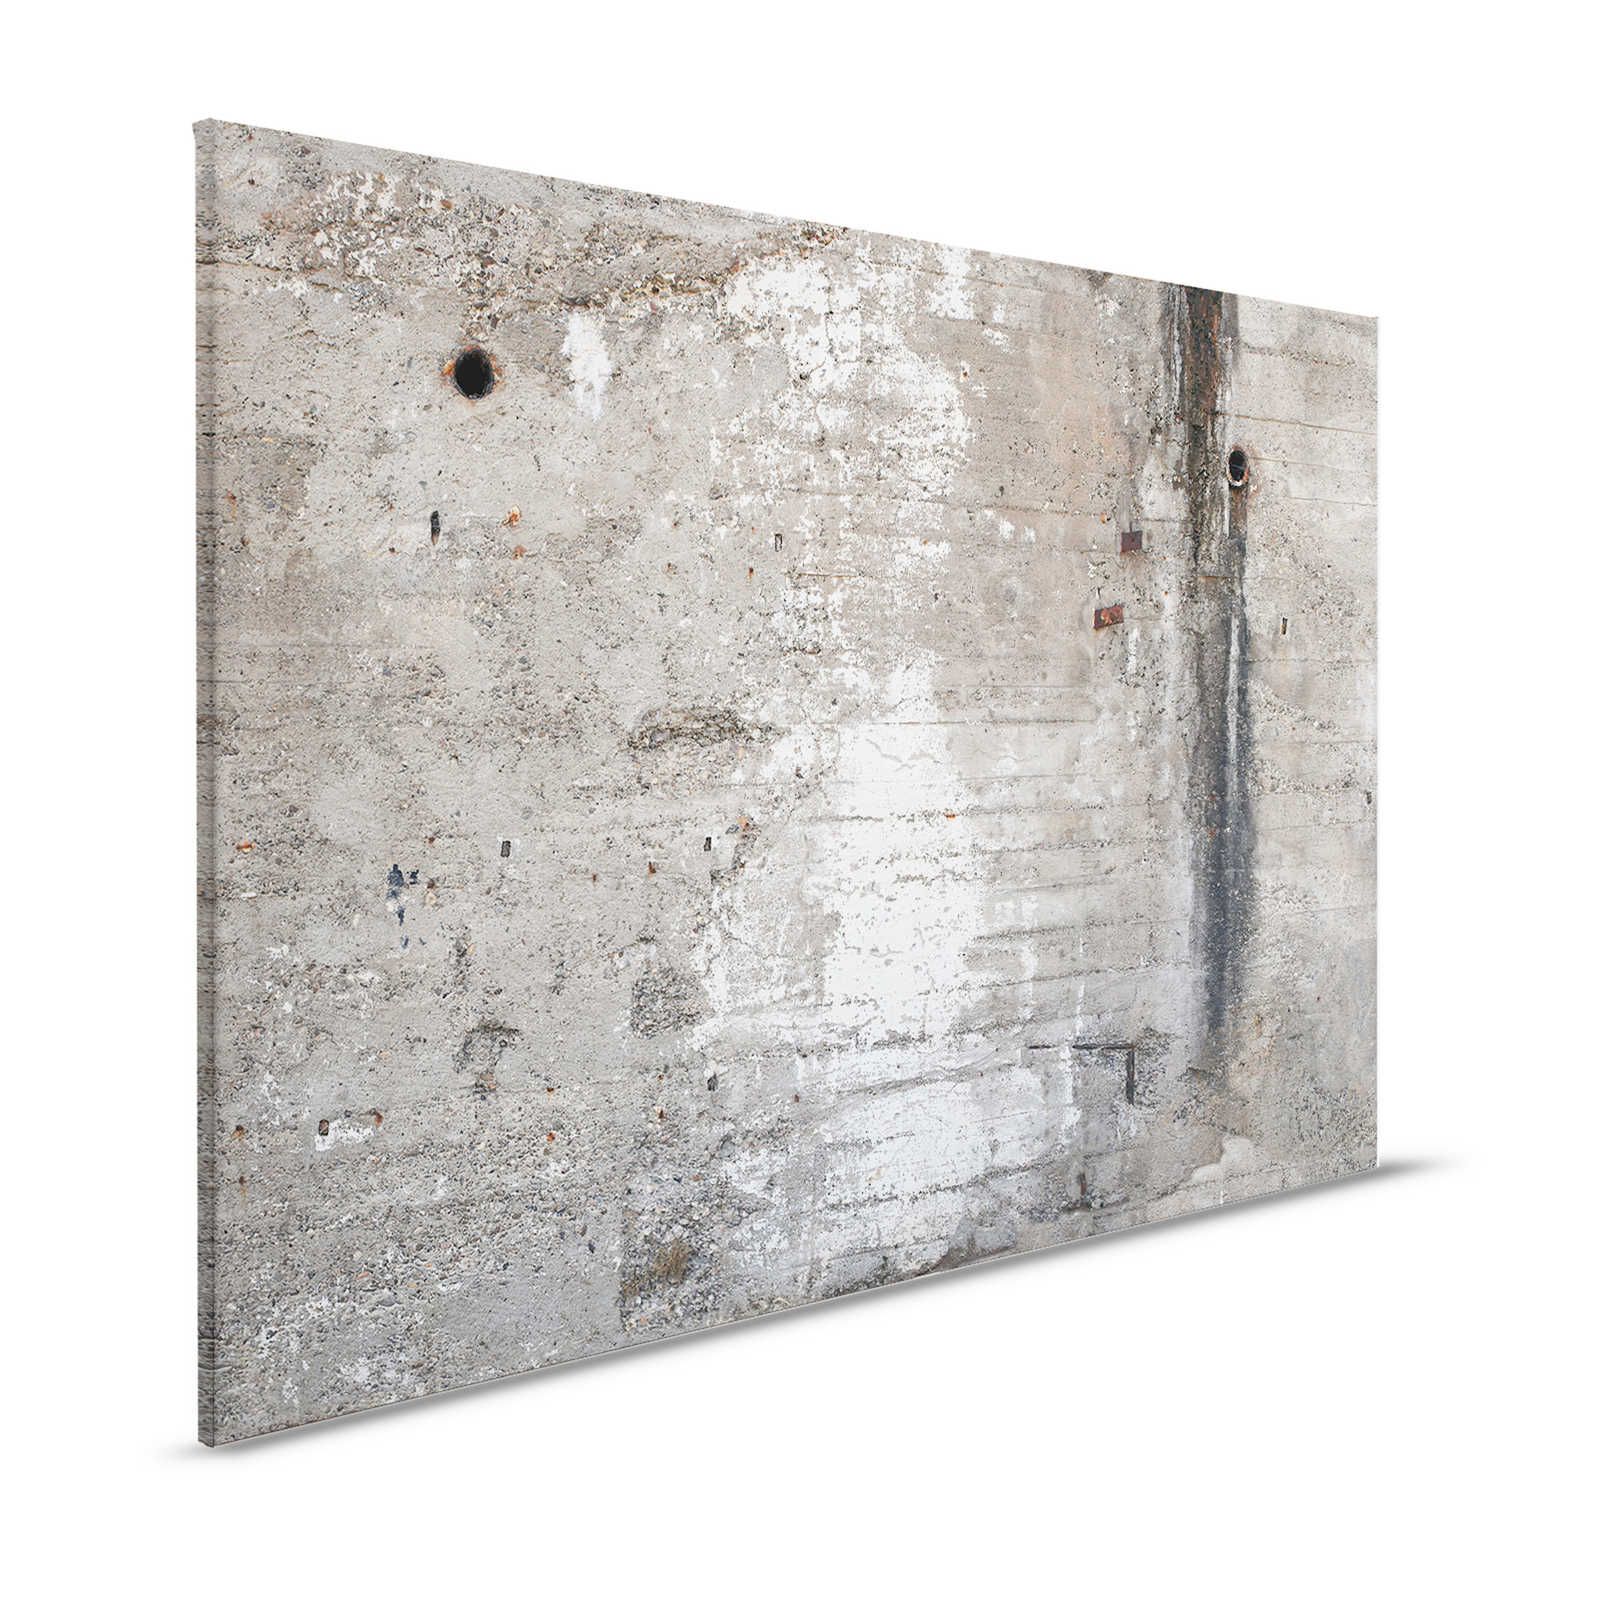 Lienzo Pared concreto Pintura Estilo Industrial Rústico - 1,20 m x 0,80 m
